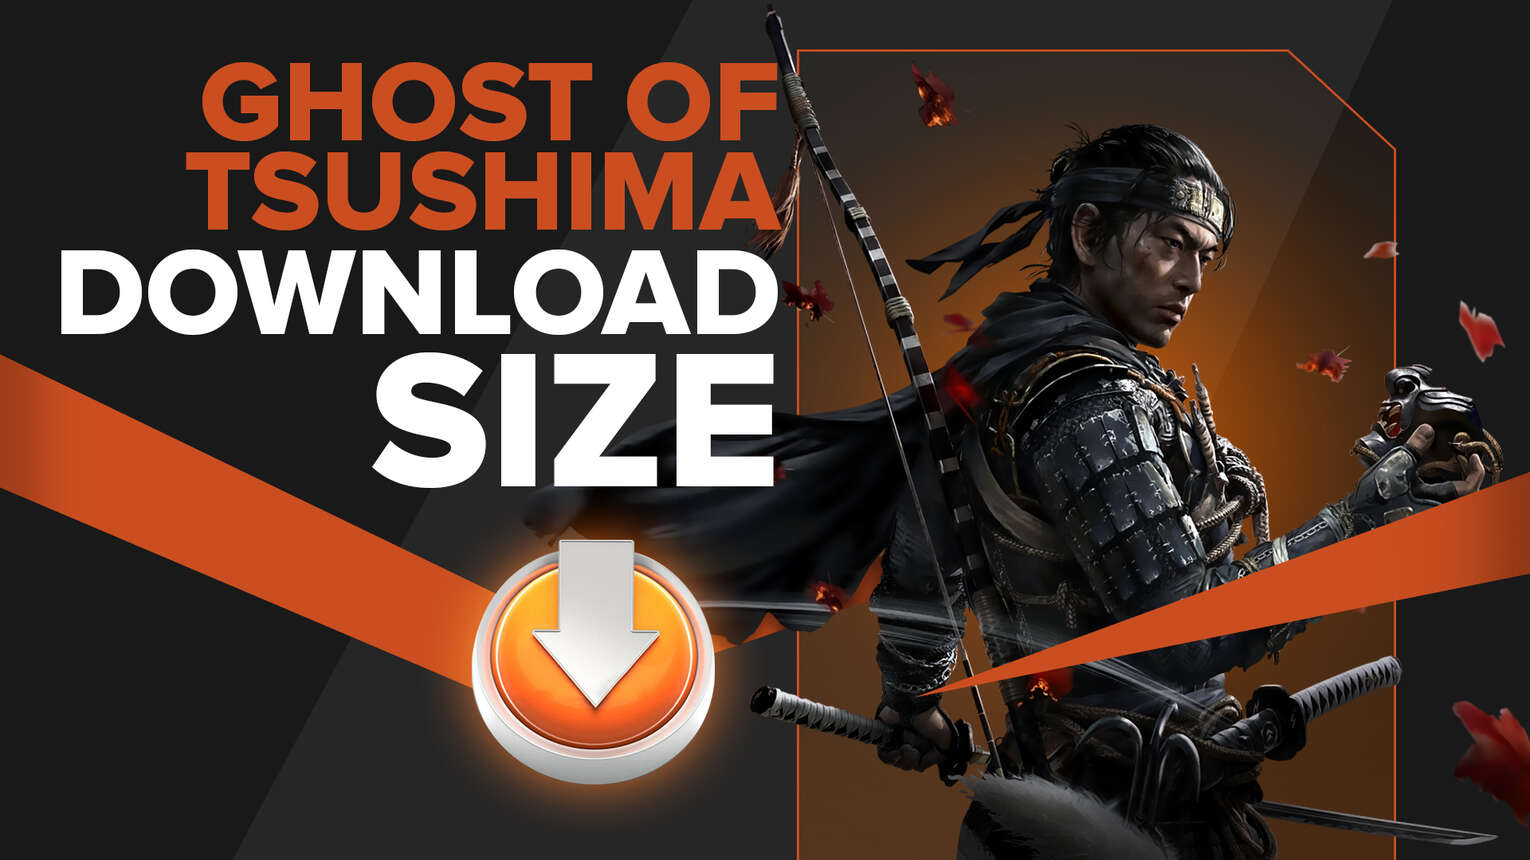 Ghost of Tsushima Review - More Than a Samurai Fantasy